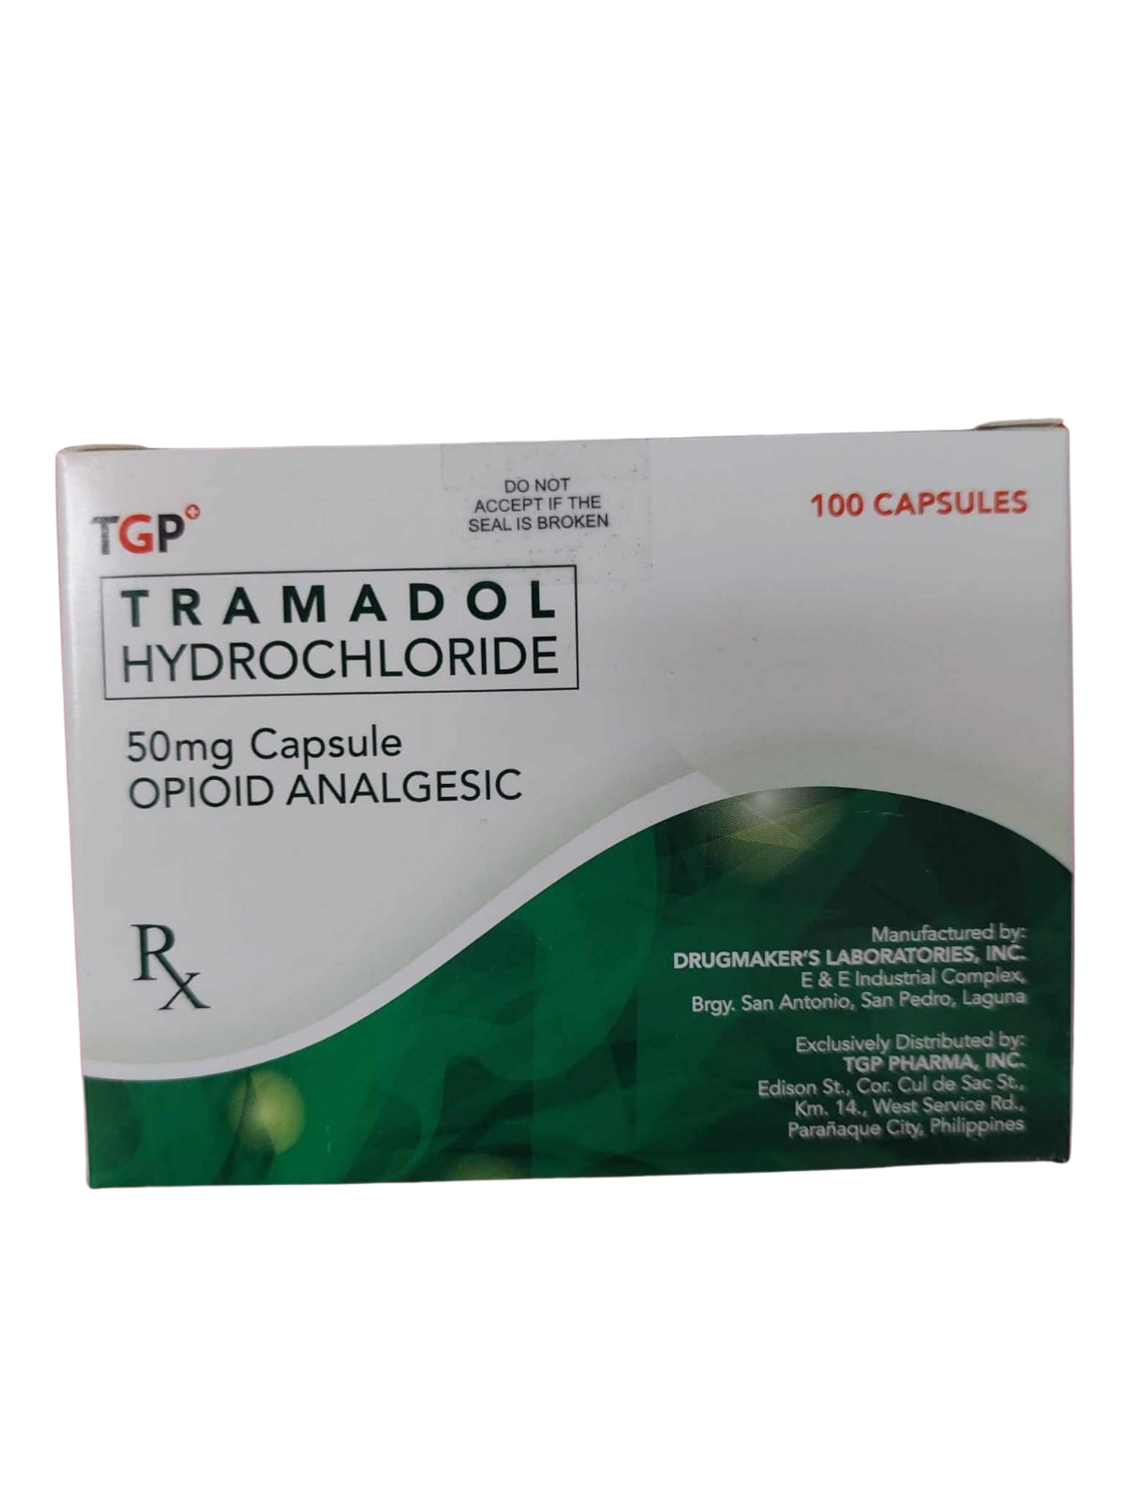 TGP Tramadol Hydrochloride 50mg Capsule